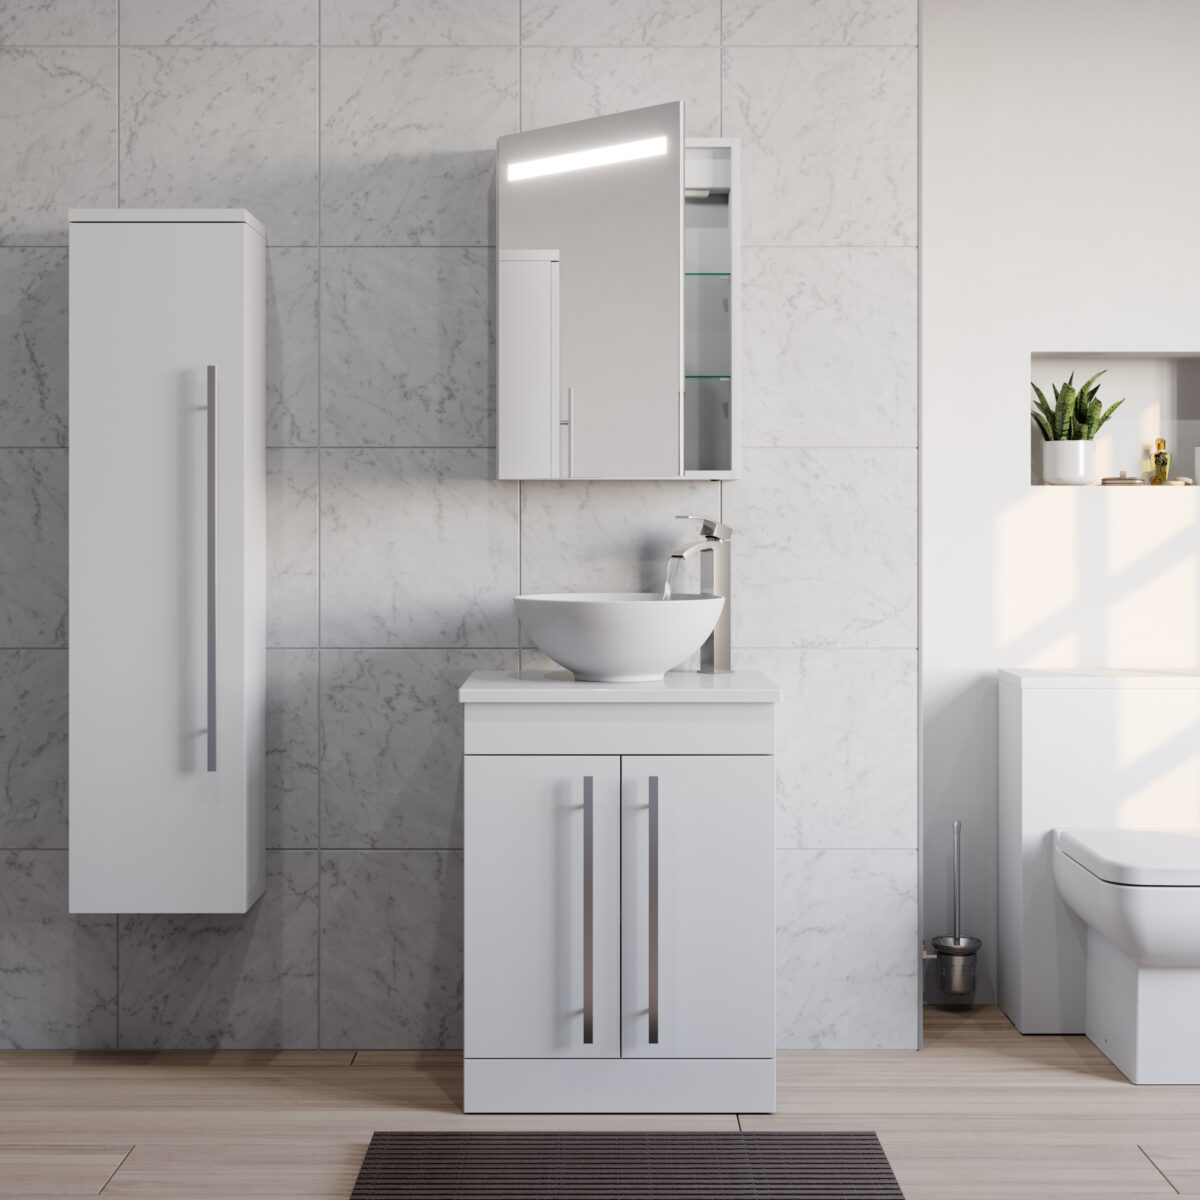 K-vit Prism illuminated bathroom mirror cabinet - Premier Tiles and Bathrooms